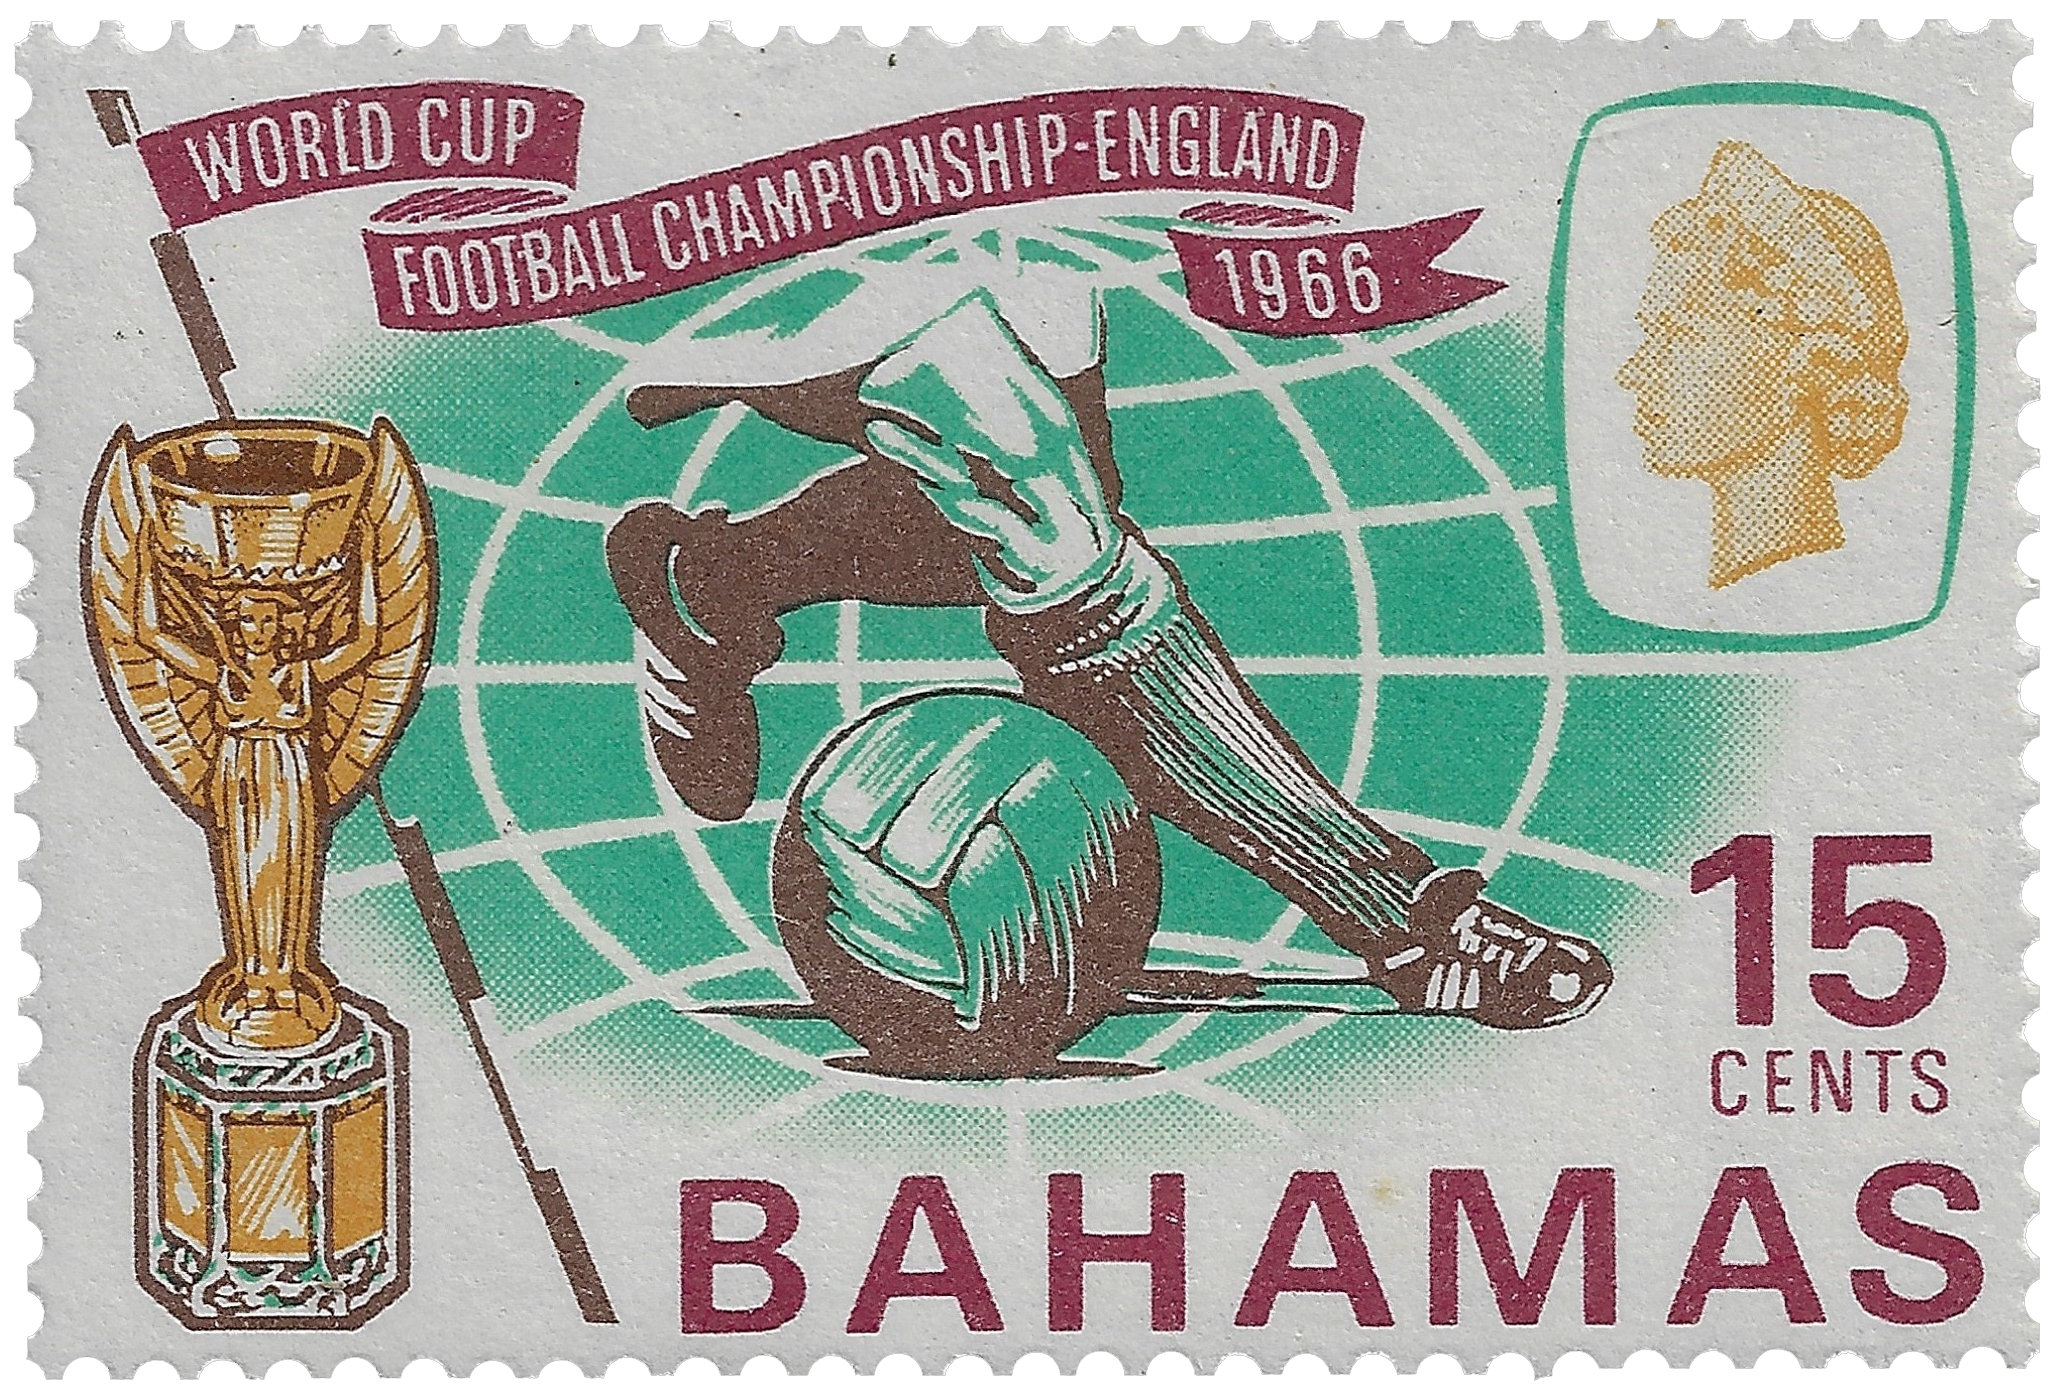 15c 1966, World Cup Football Championship-England